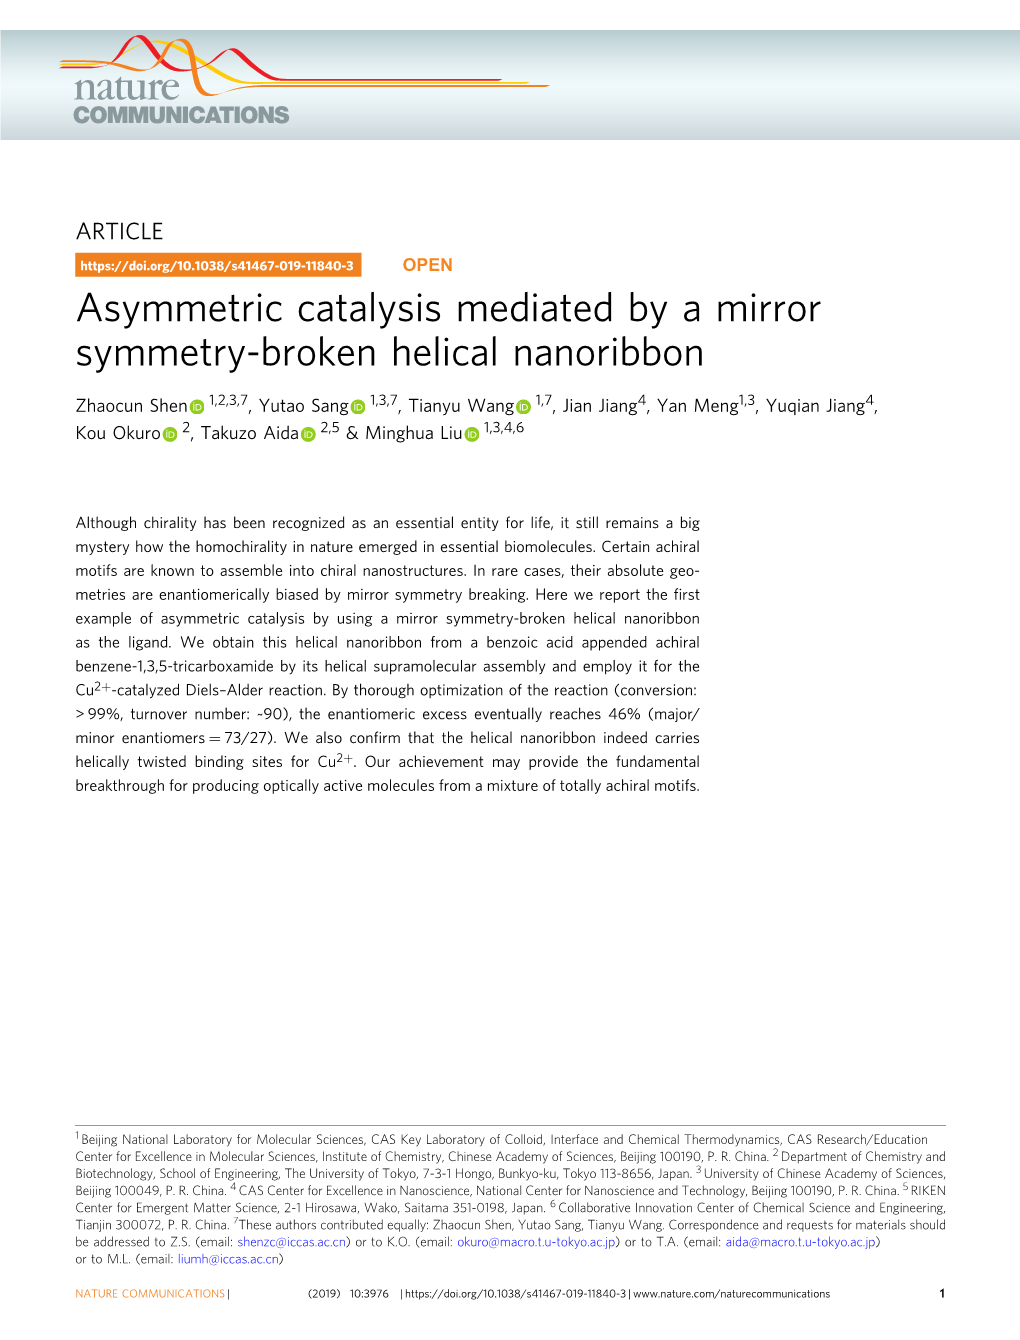 Asymmetric Catalysis Mediated by a Mirror Symmetry-Broken Helical Nanoribbon